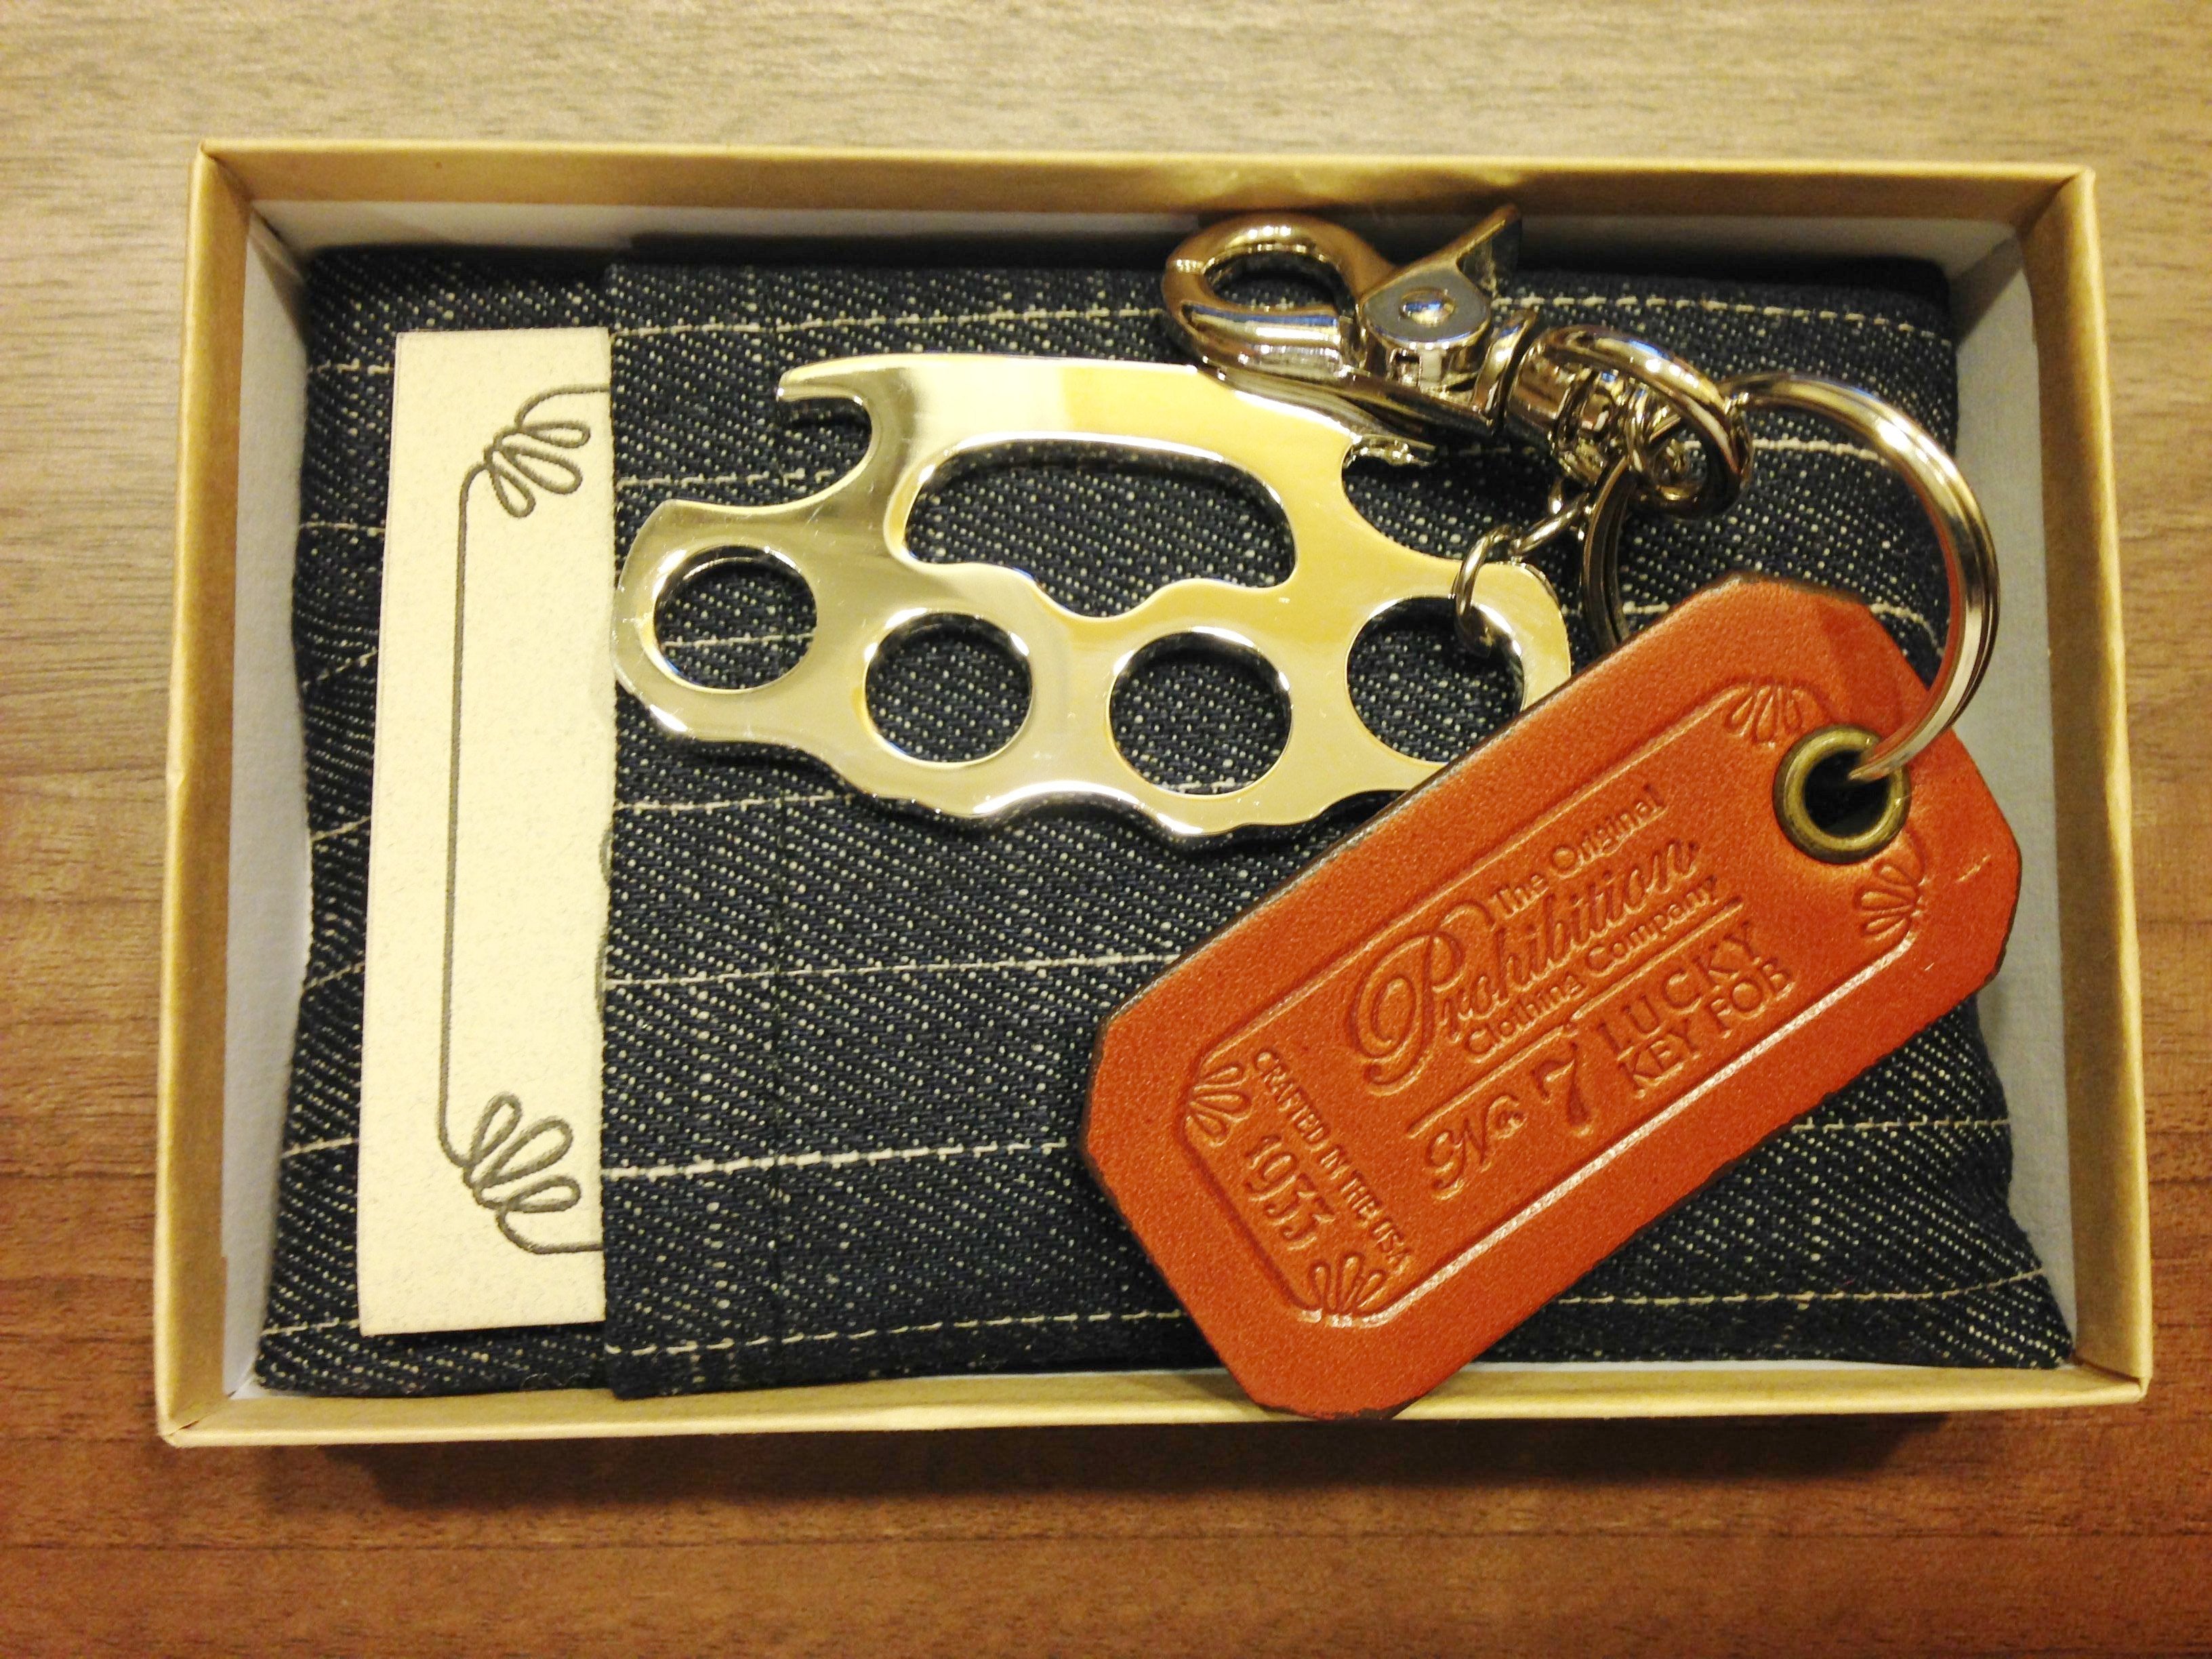 The Original Keychain Bottle Opener